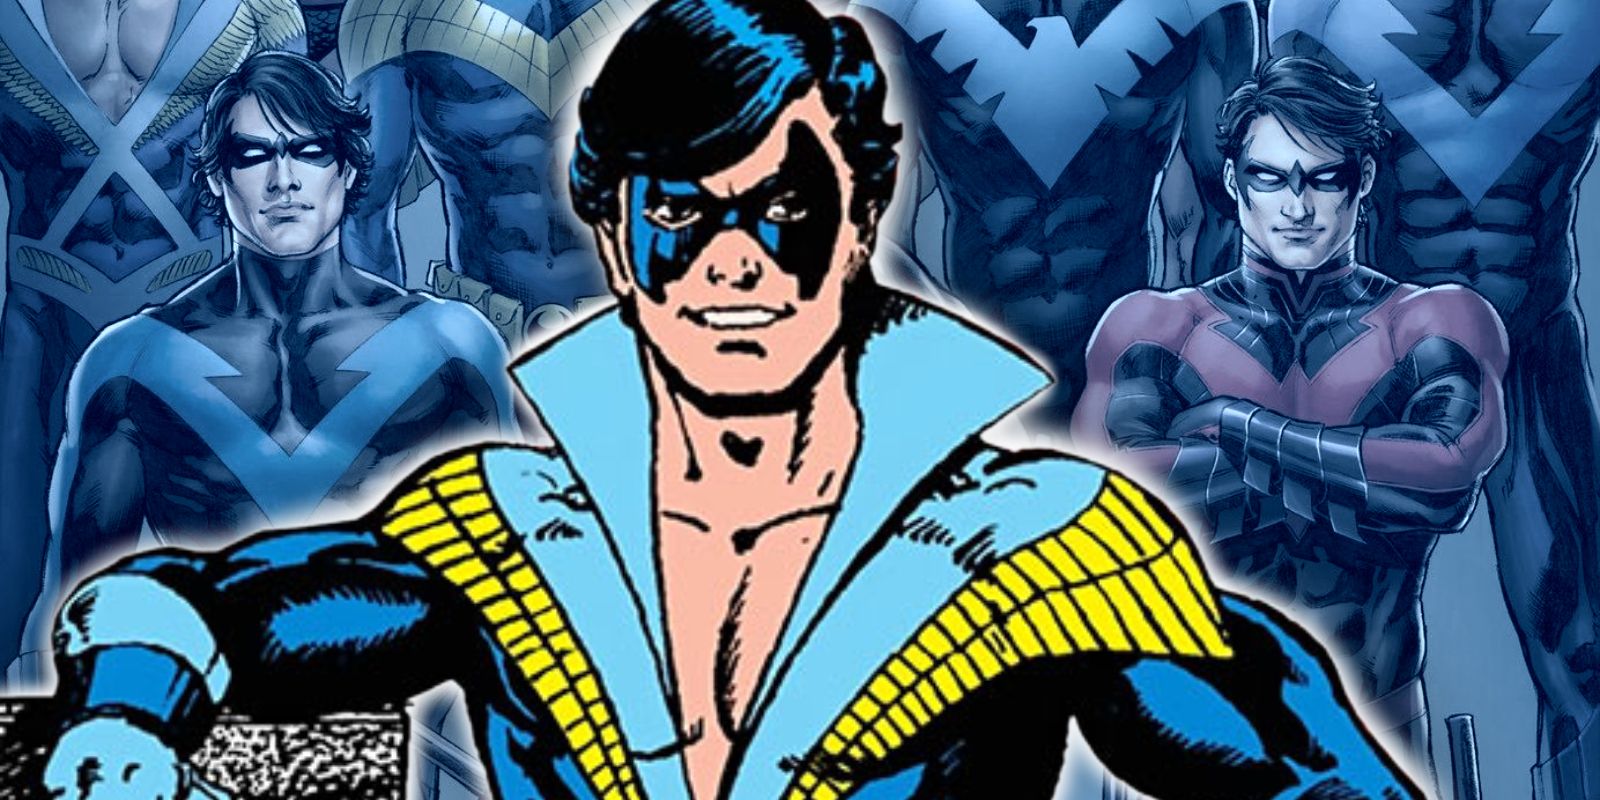 Nightwing-has-a-goofy-classic-costume.jpg